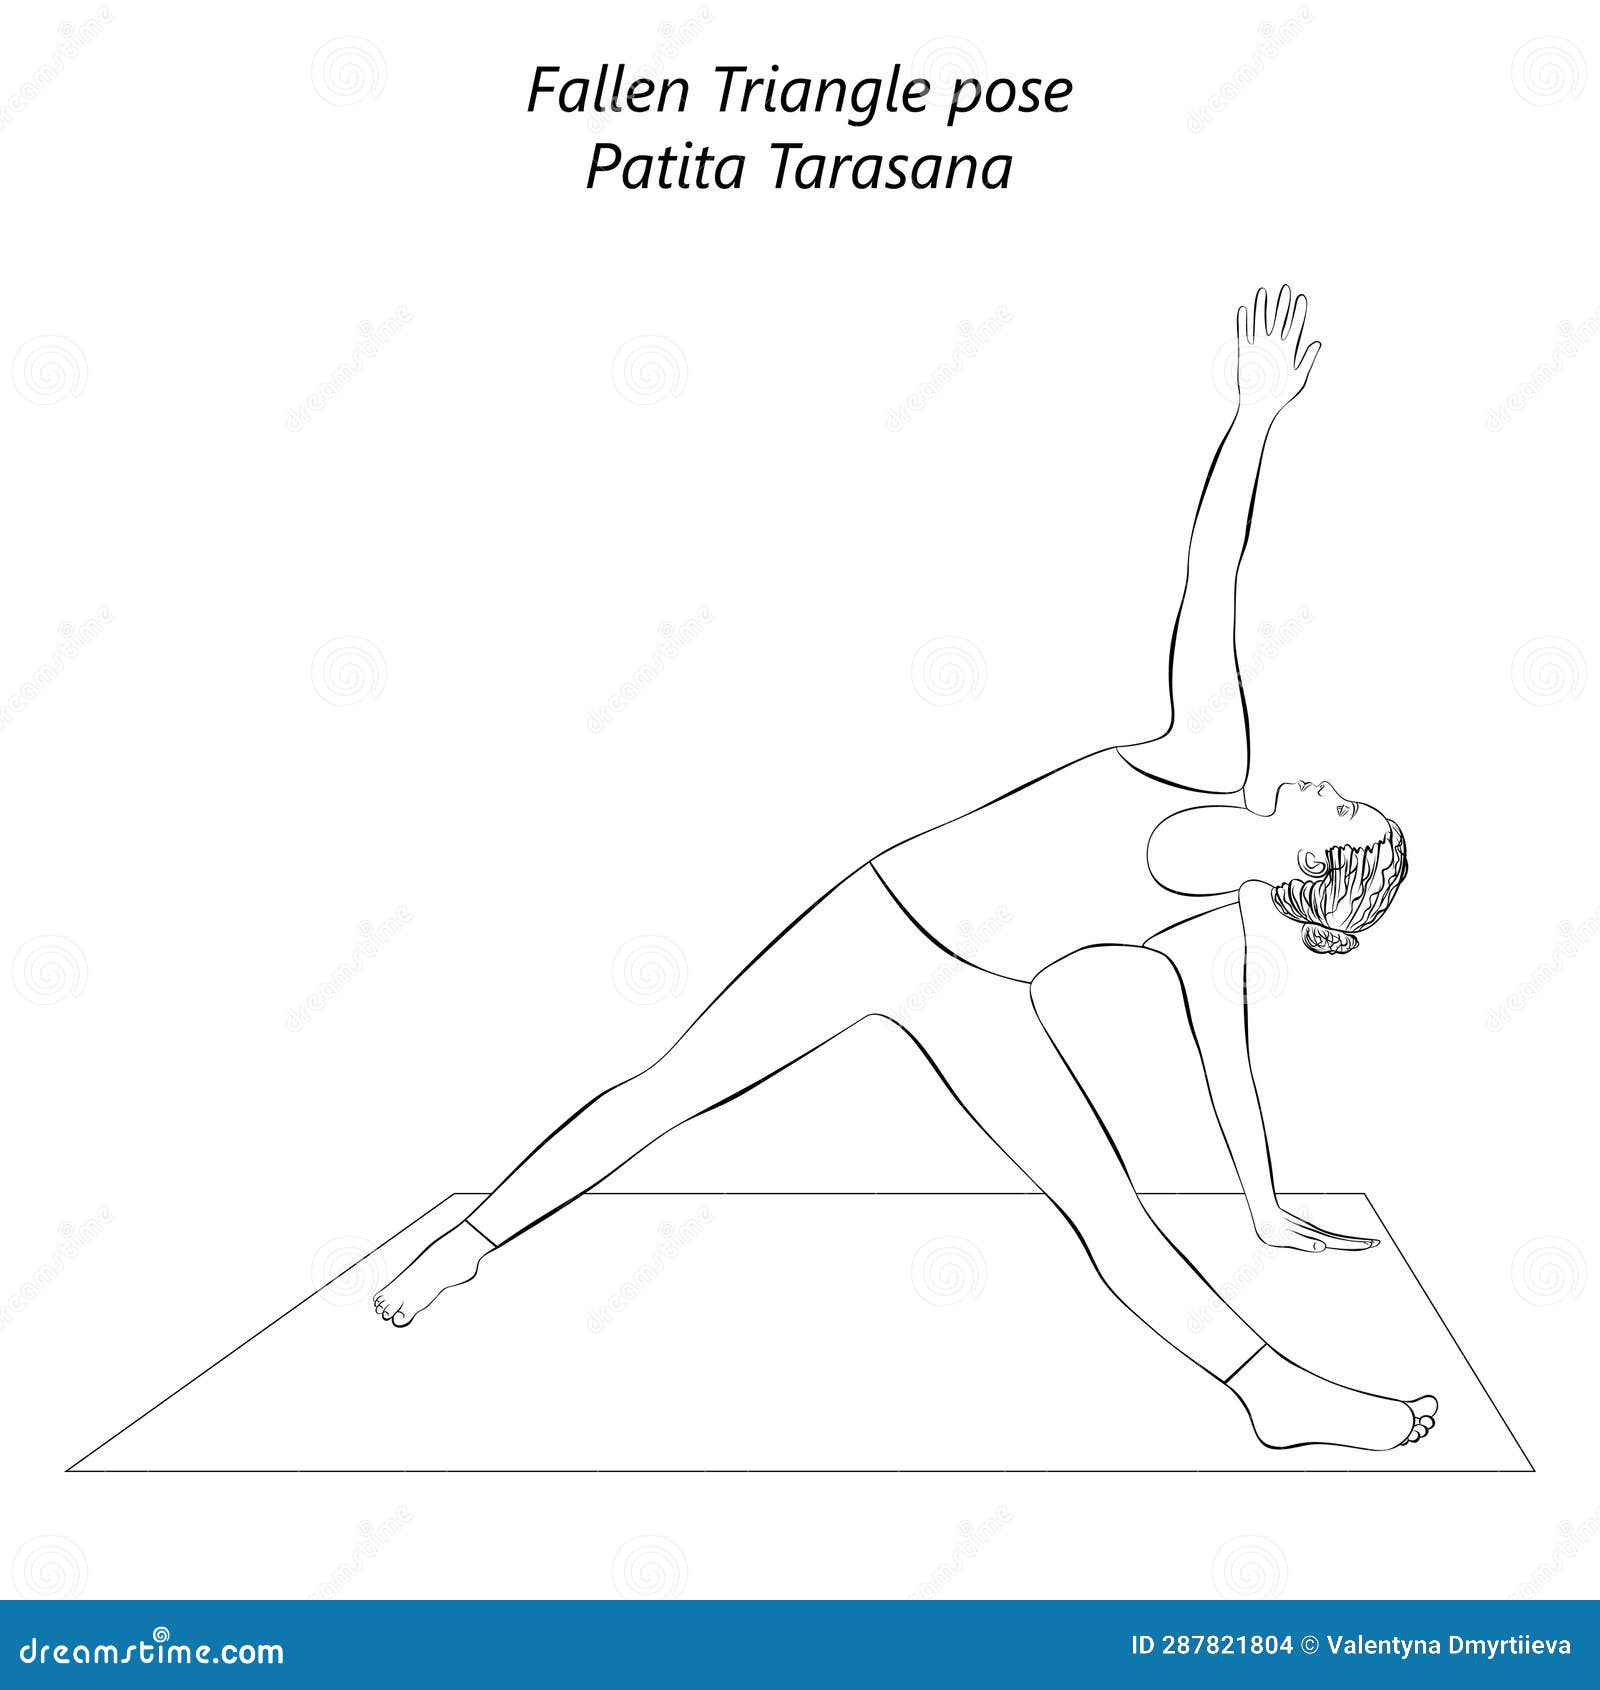 sketch young woman practicing yoga doing fallen triangle pose fallen star pose patita tarasana arm leg support backbend 287821804